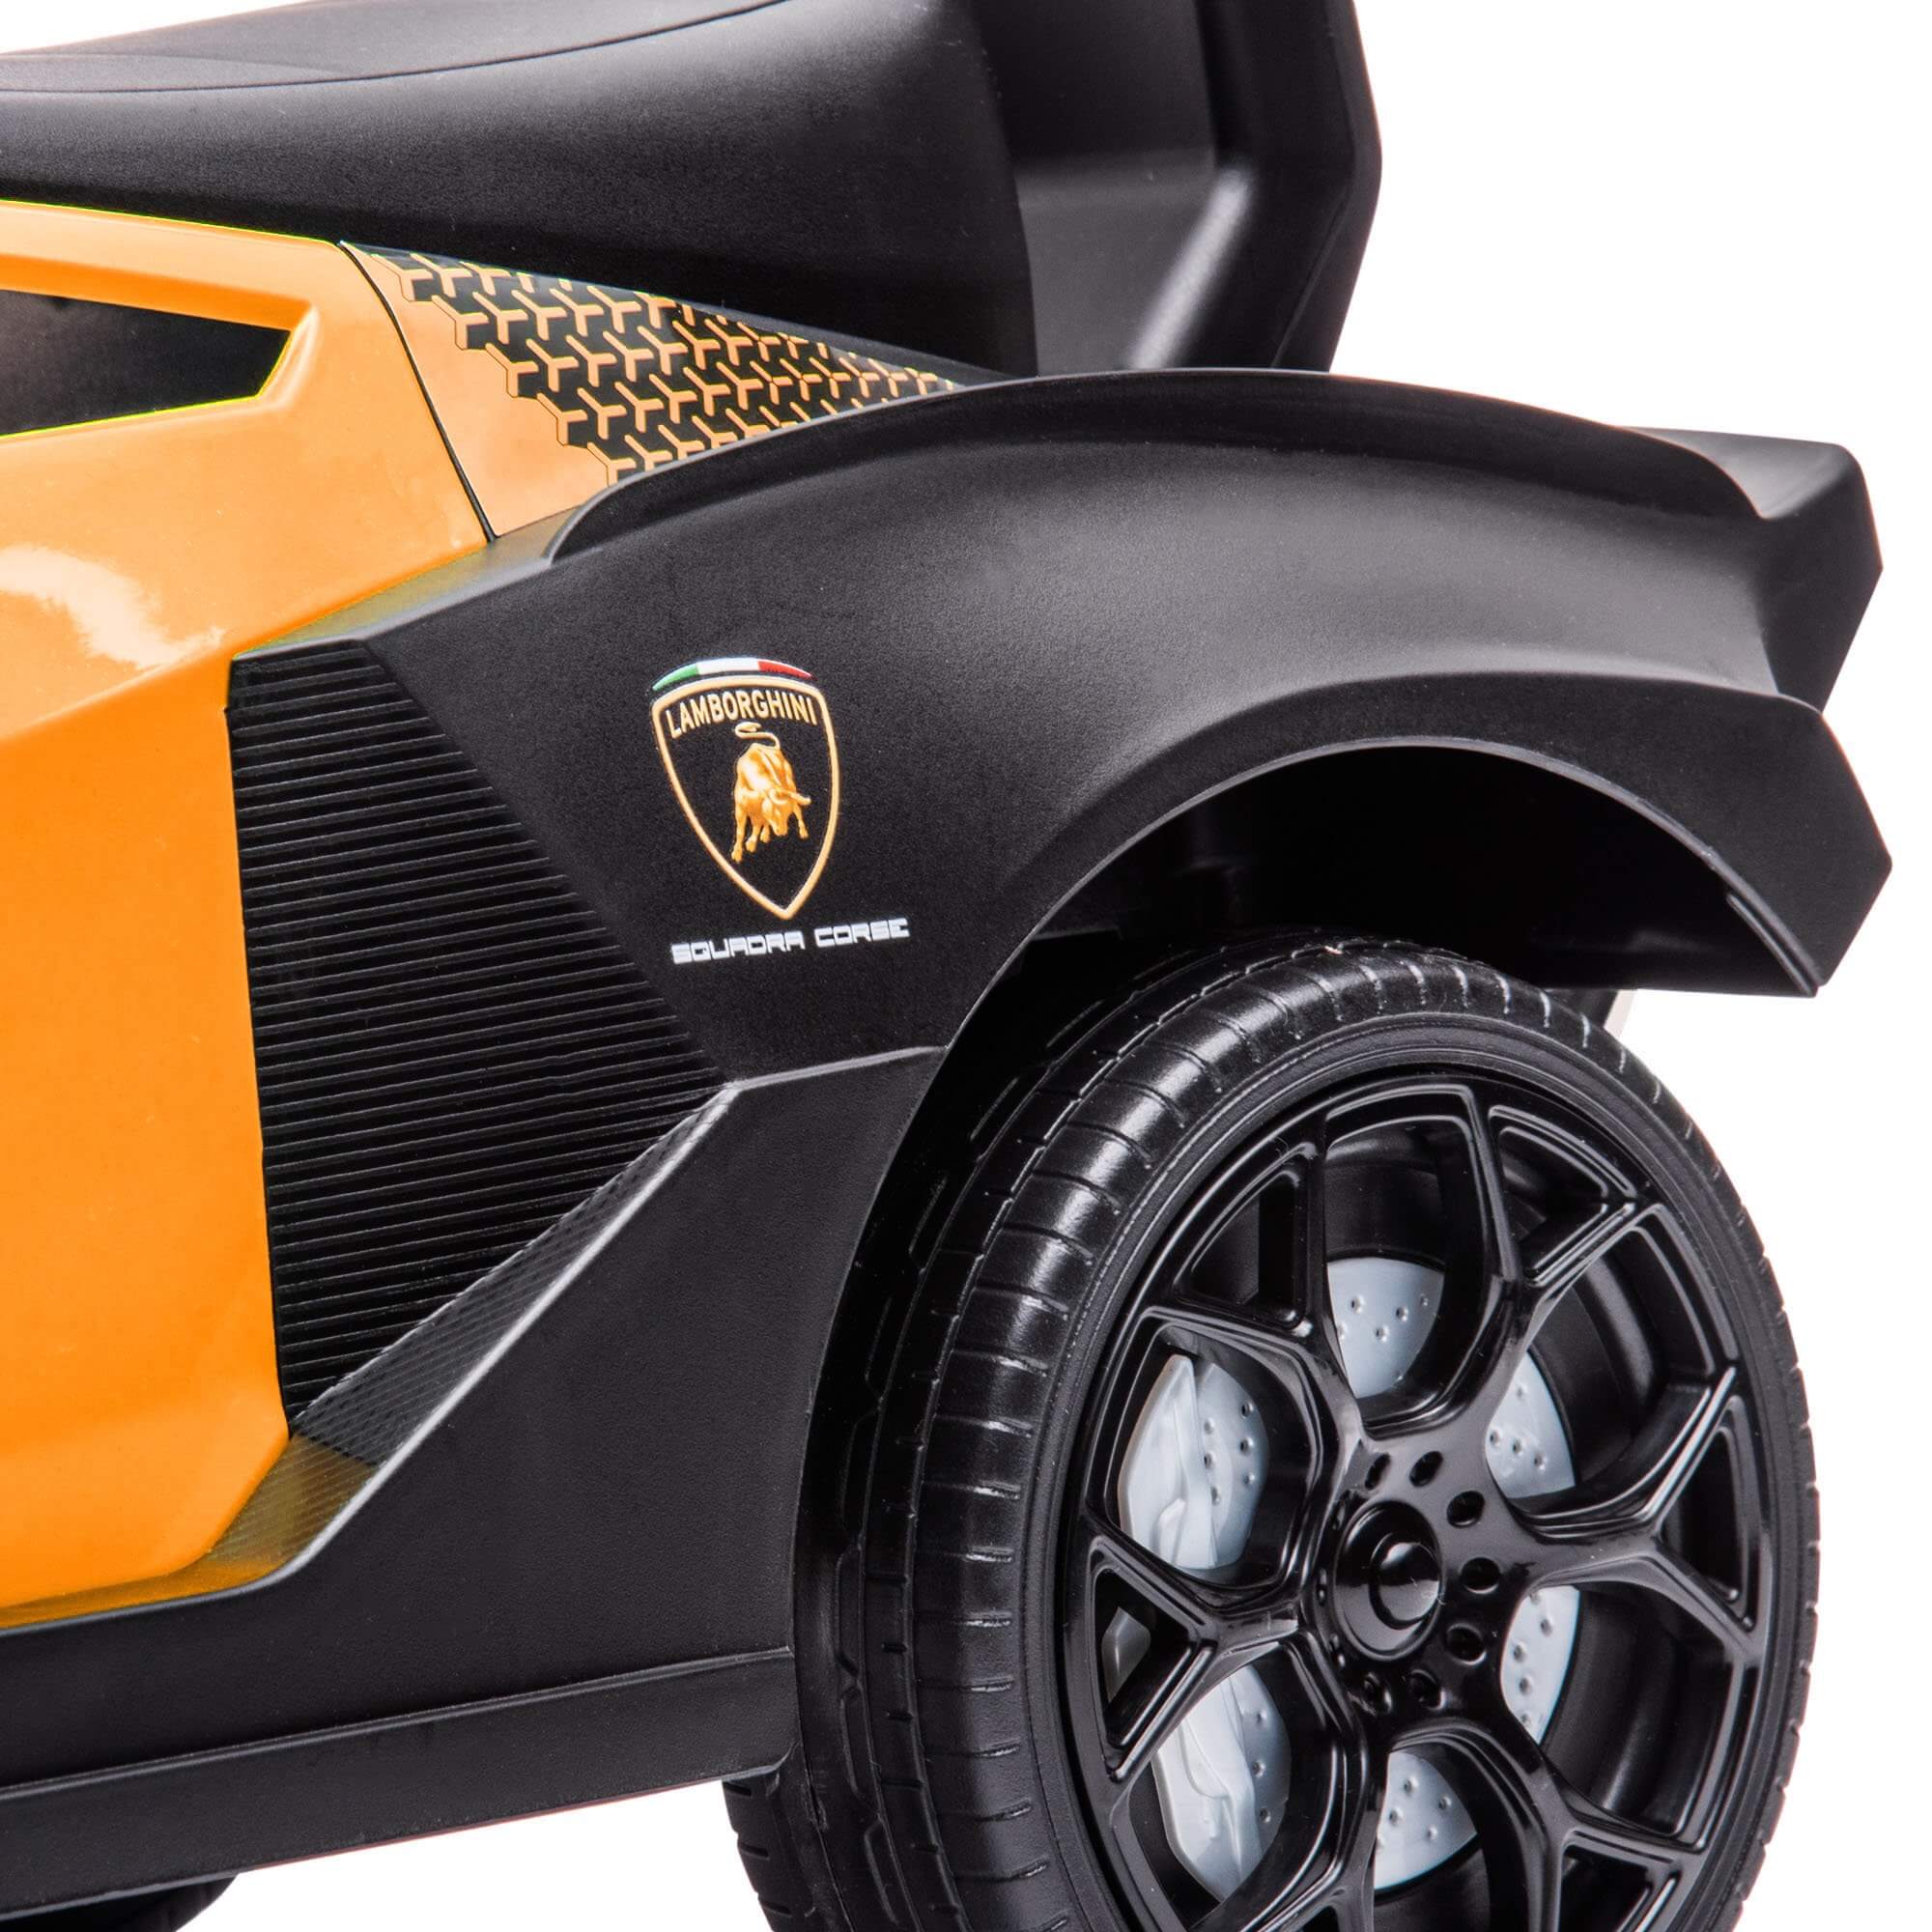 Megastar Ride on  Licensed Lamborghini Signature  Push-Along Stroller with Horn Engine Sound and Steering Wheel-Orange